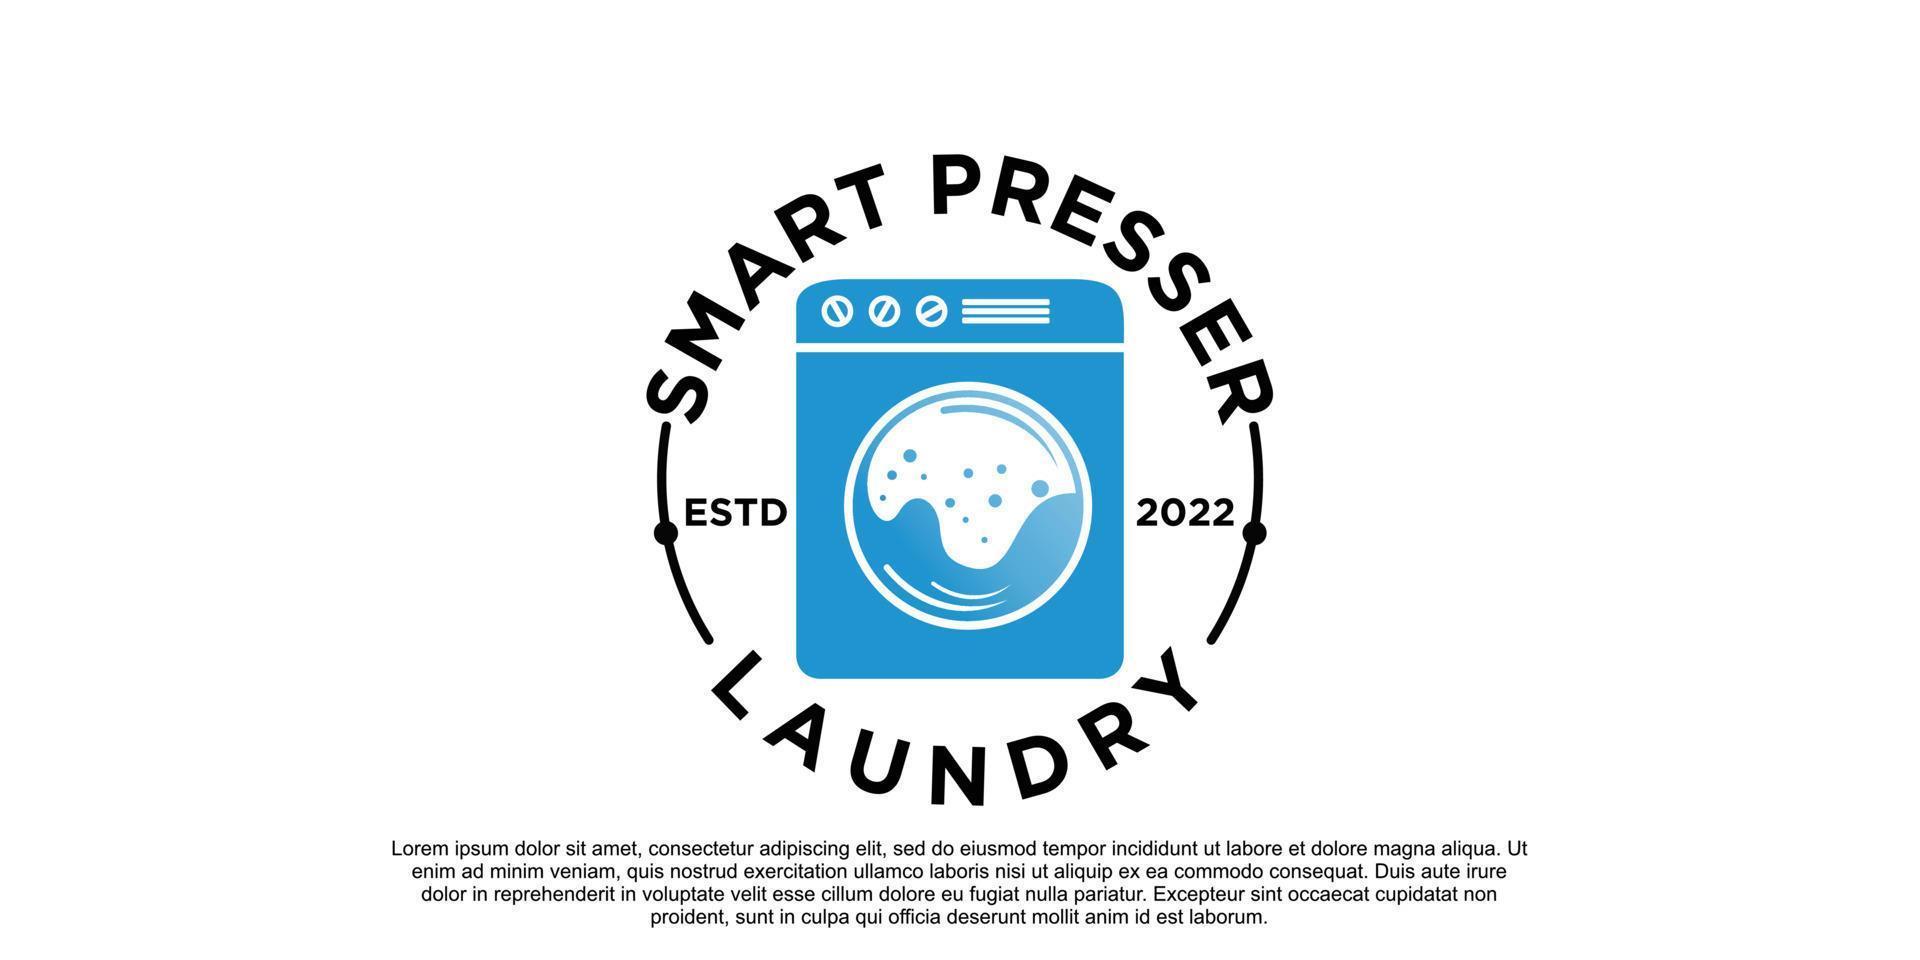 Laundry logo design with creative concept Premium Vector part 3